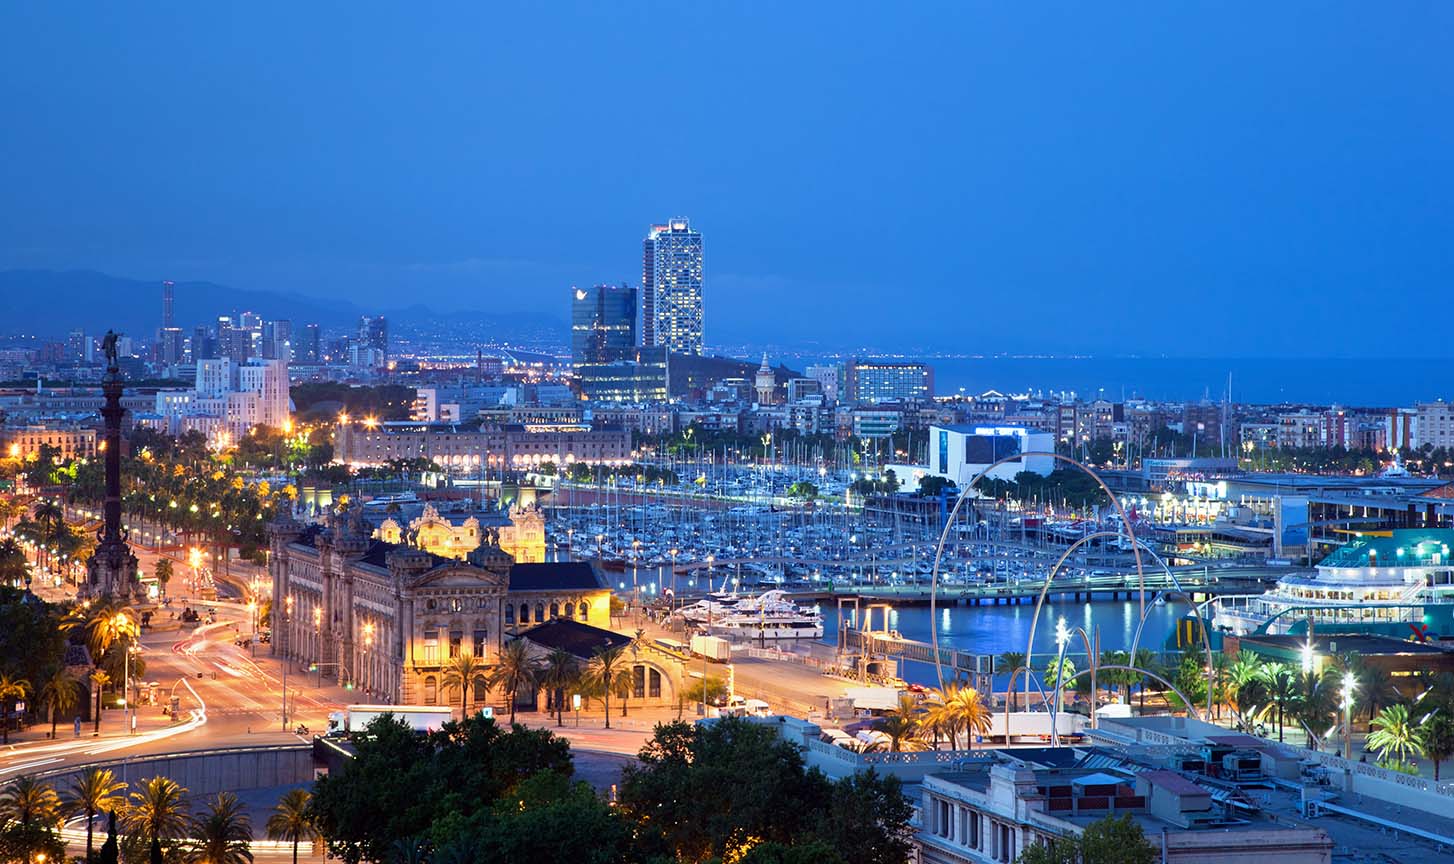 Barcelona, Spain skyline at night. Horbor view